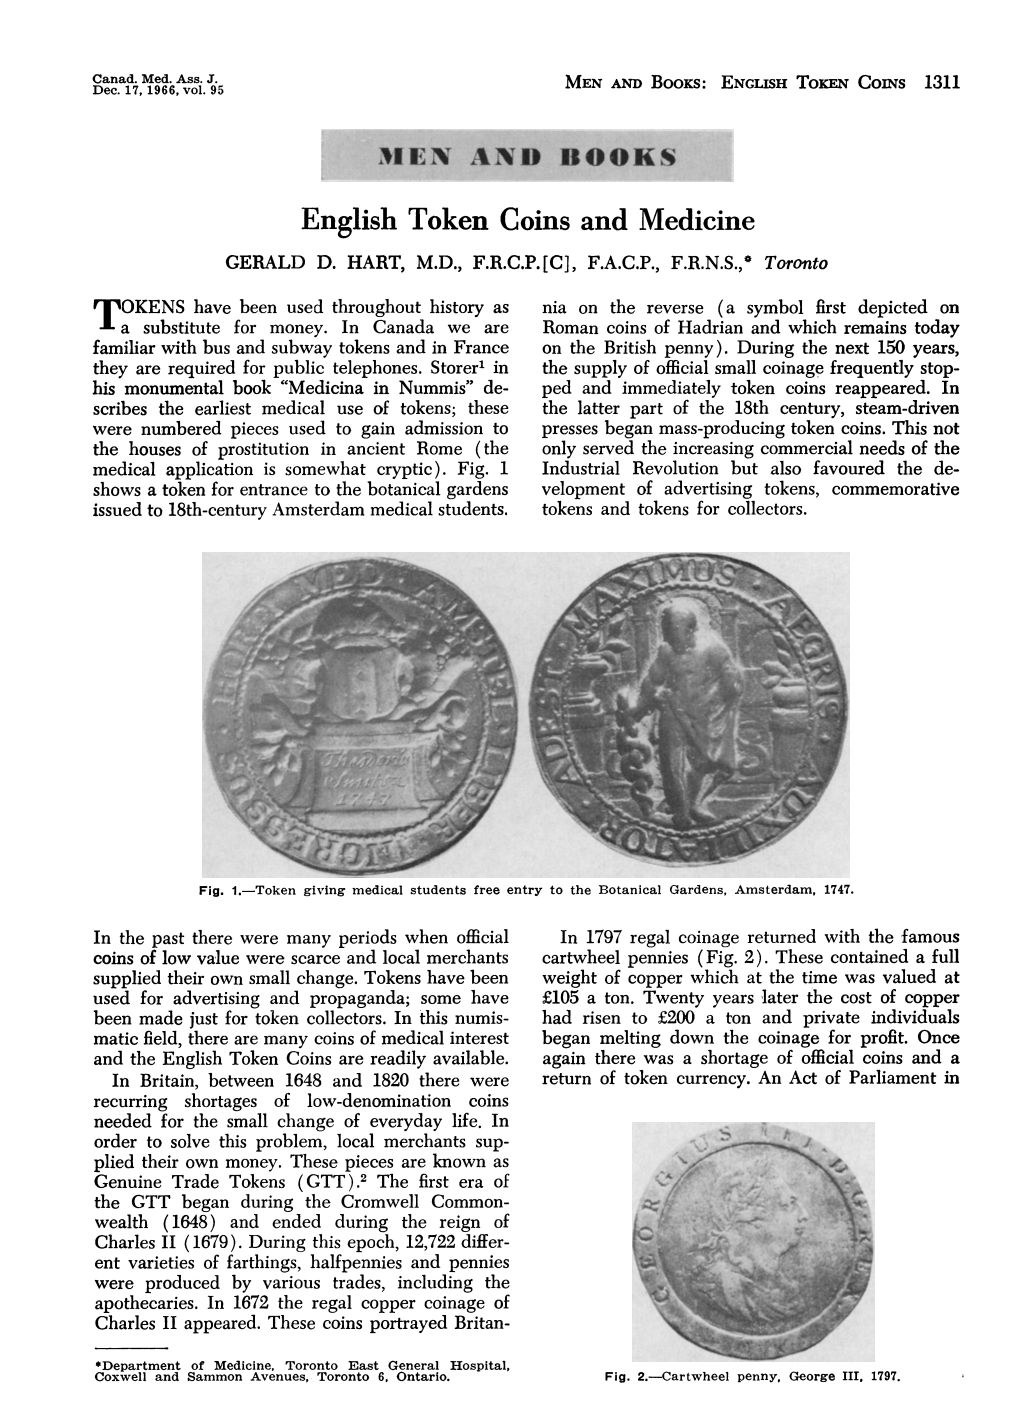 English Token Coins and Medicine GERALD D